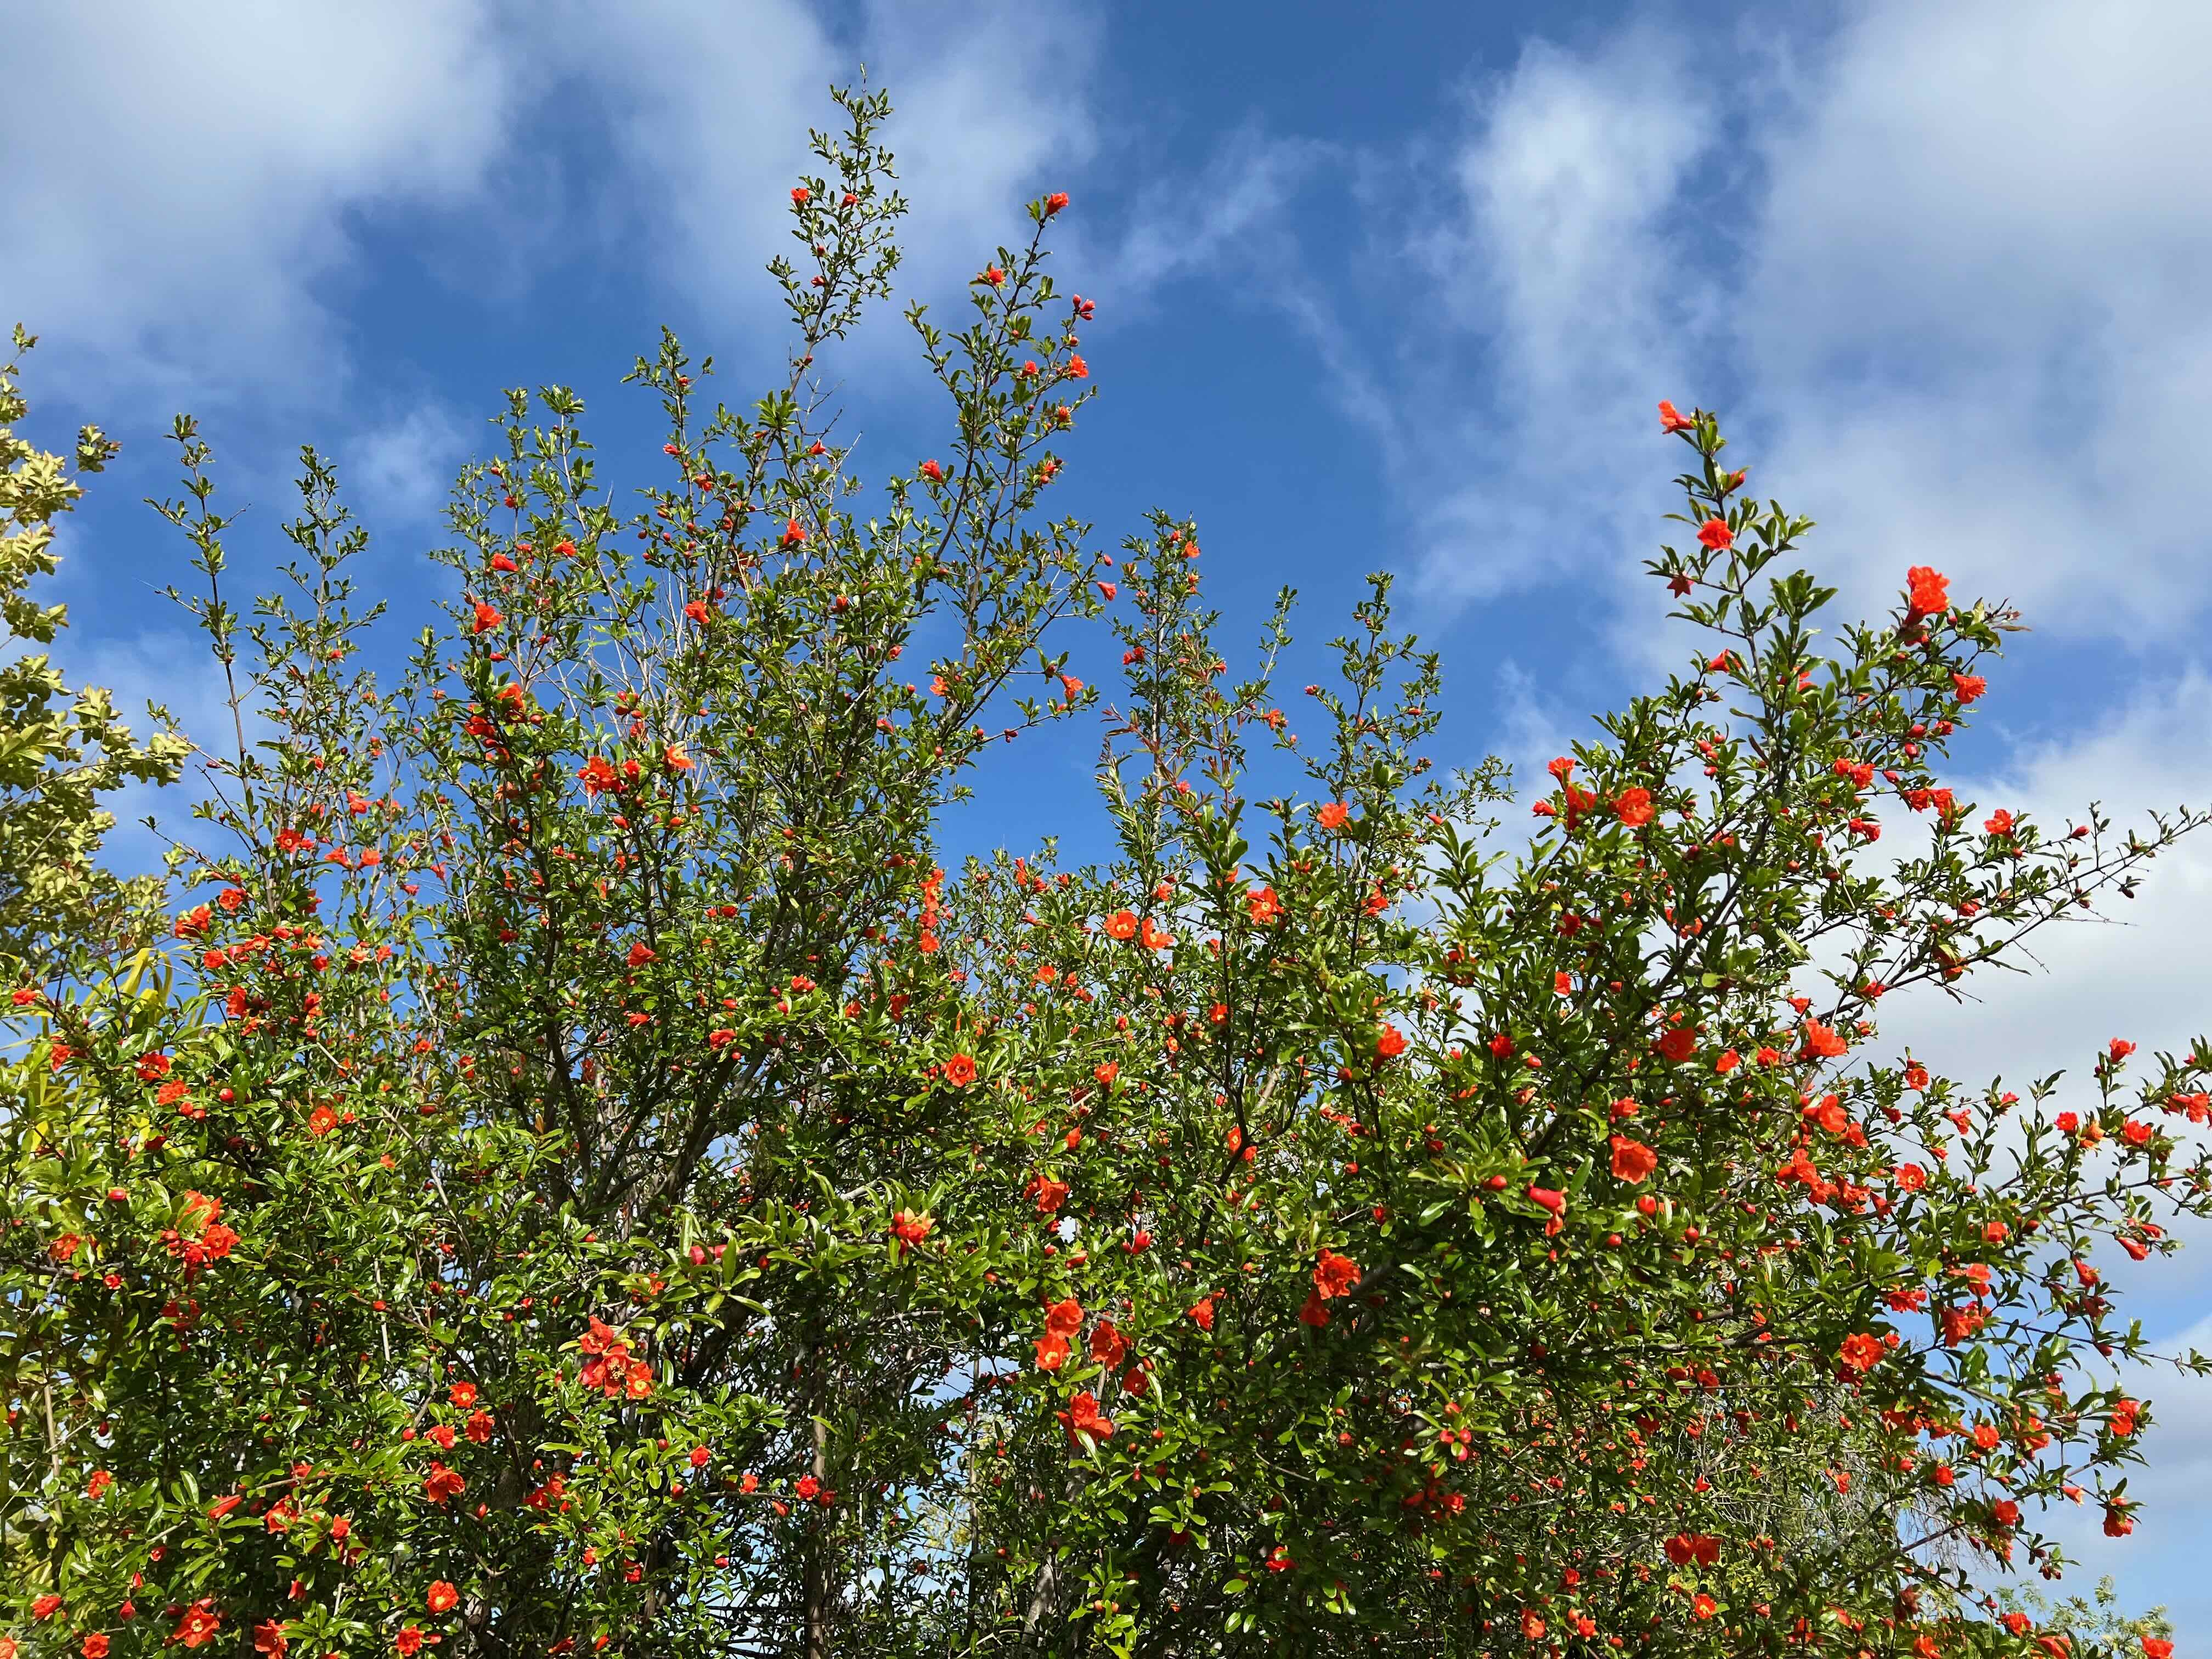 this astonishing pomegranate tree